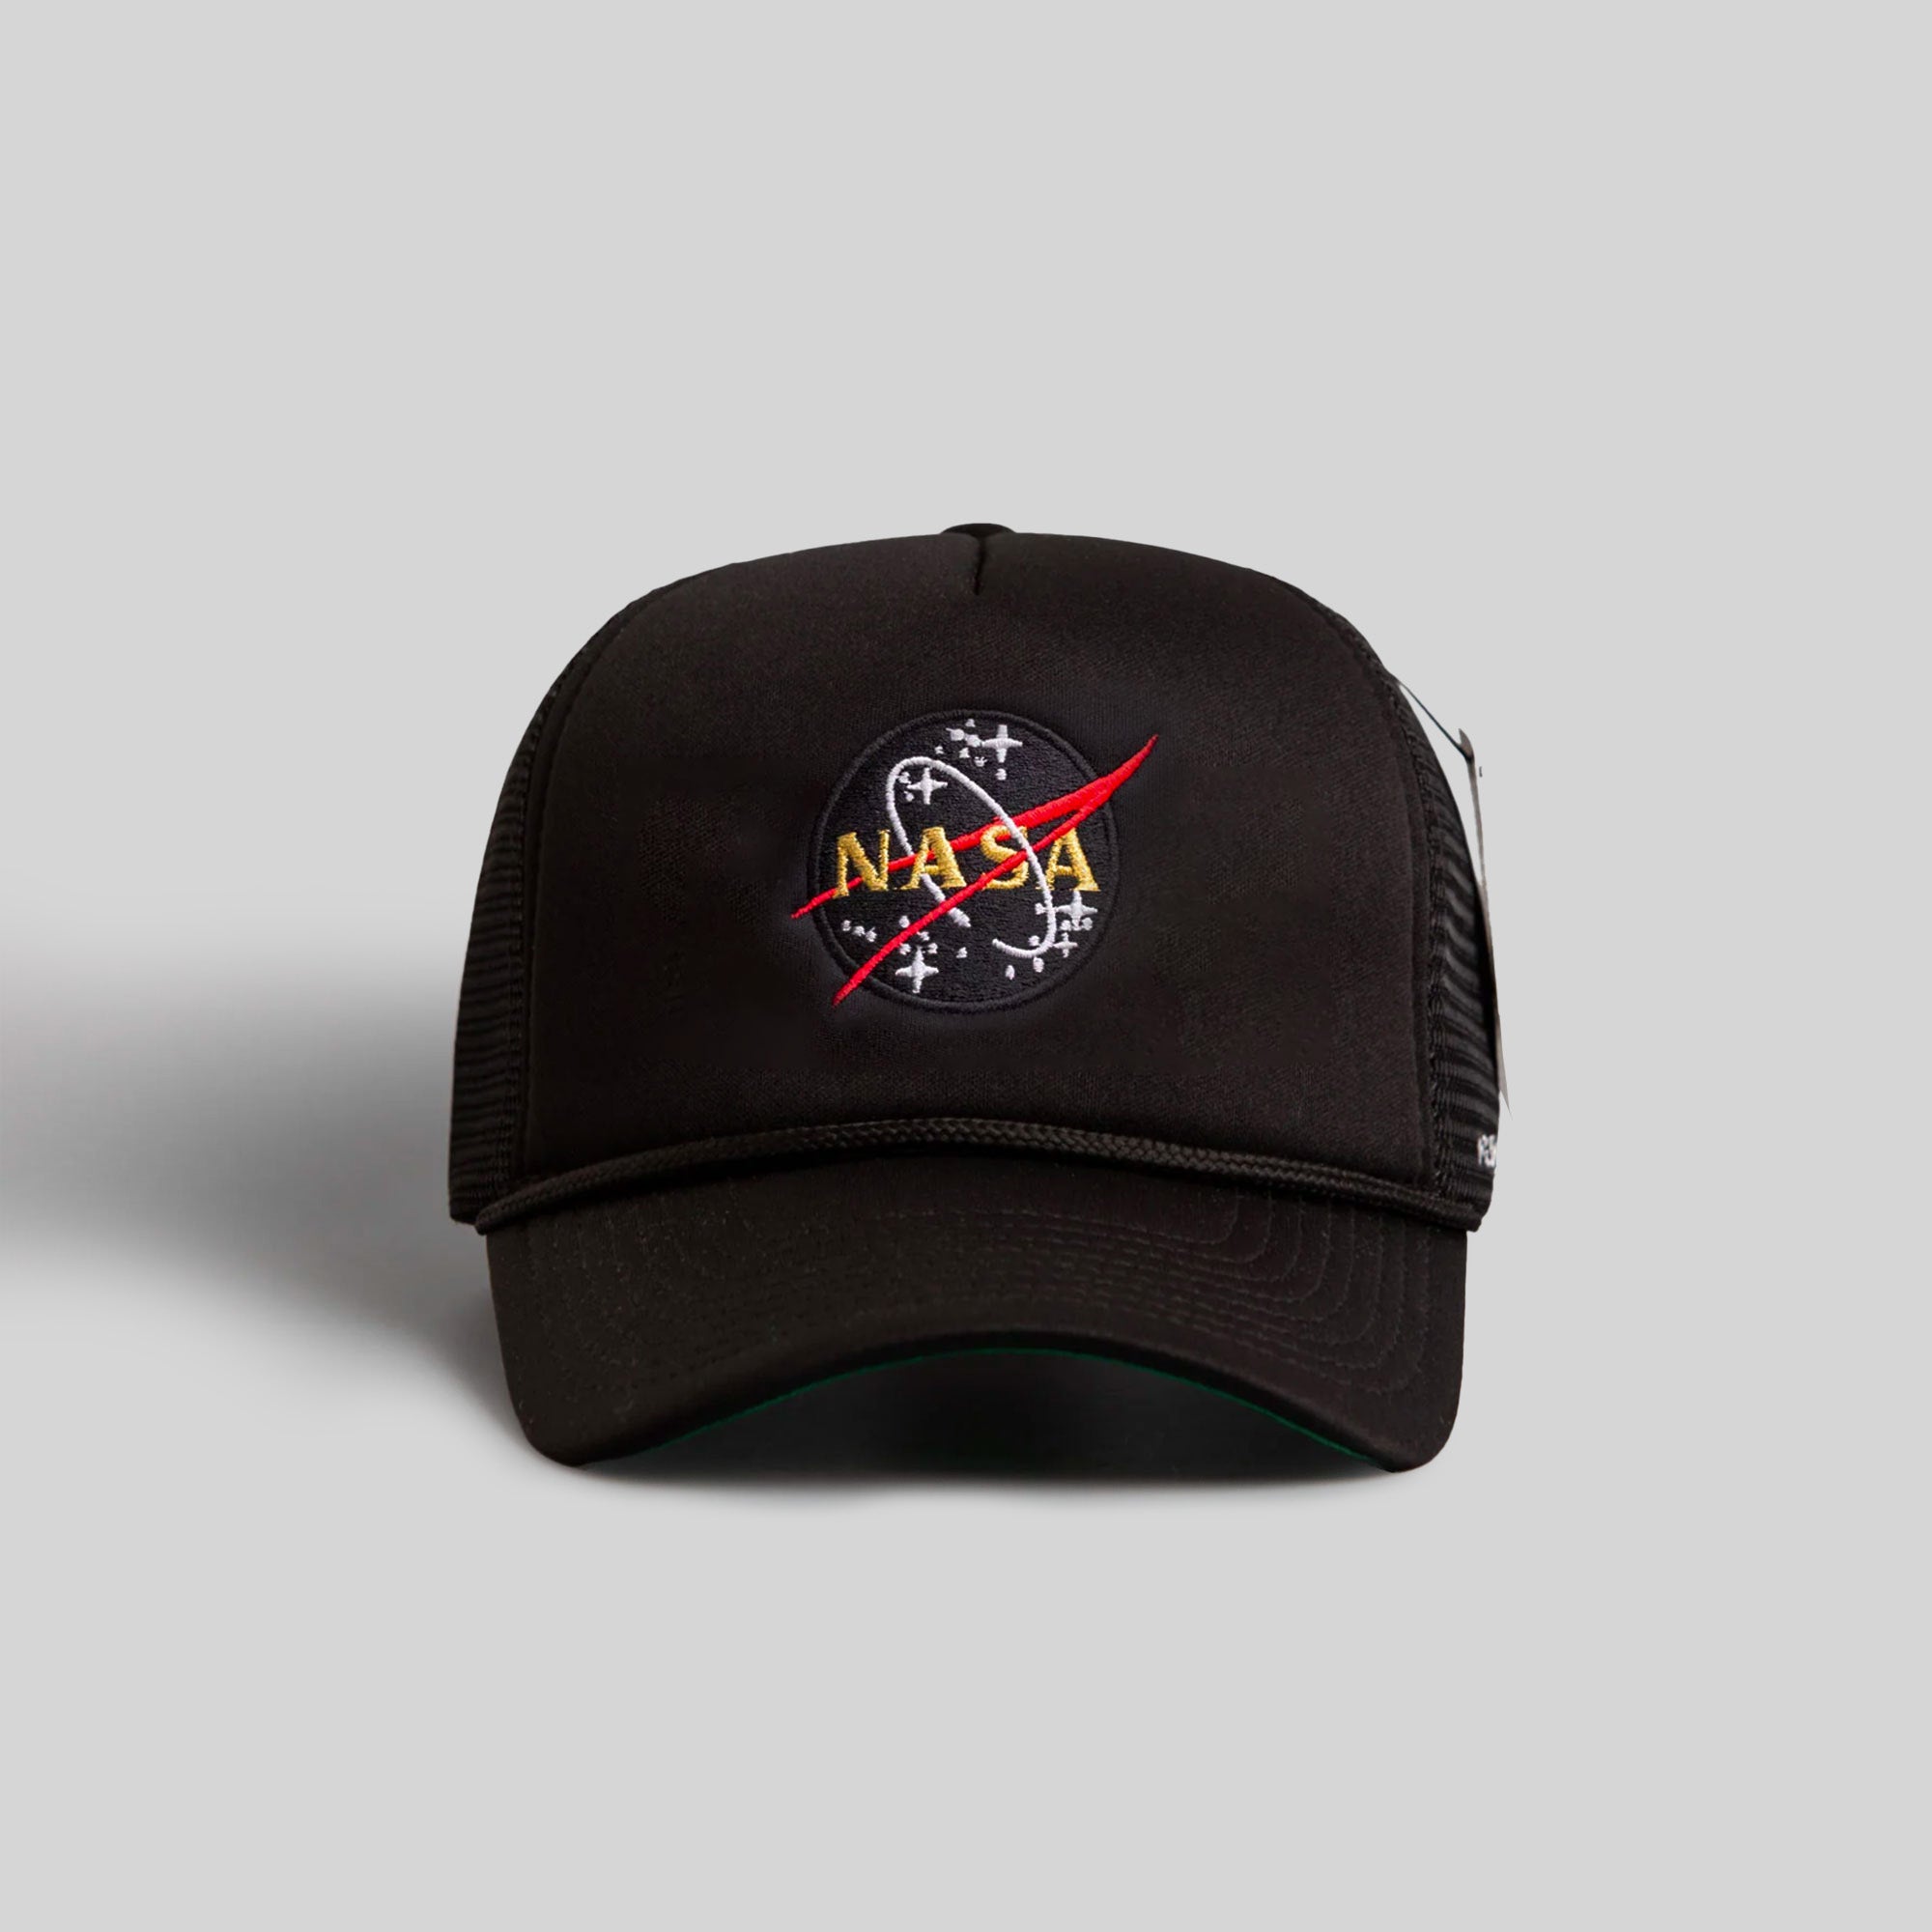 SKYLAB NASA 50TH ANNIVERSARY BLACK TRUCKER HAT